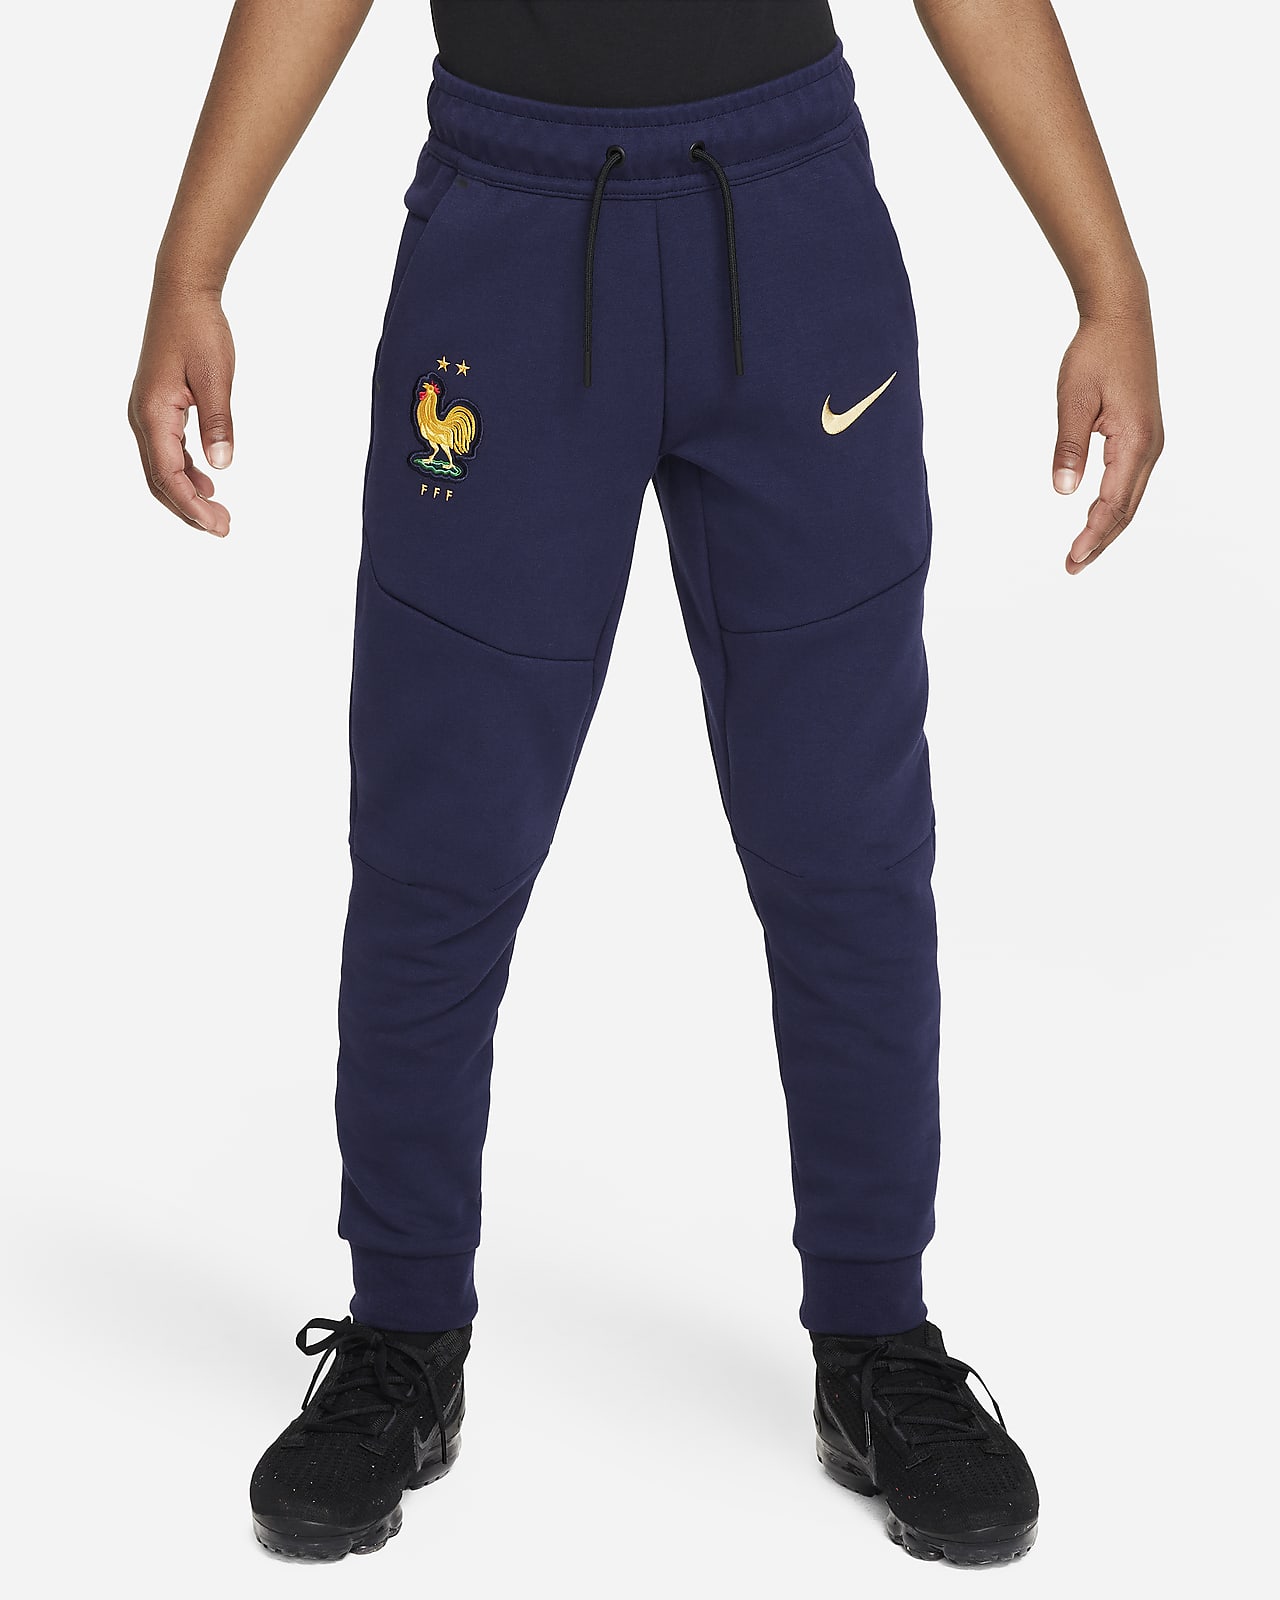 Pantalon Nike Football FFF Tech Fleece pour ado (garçon)